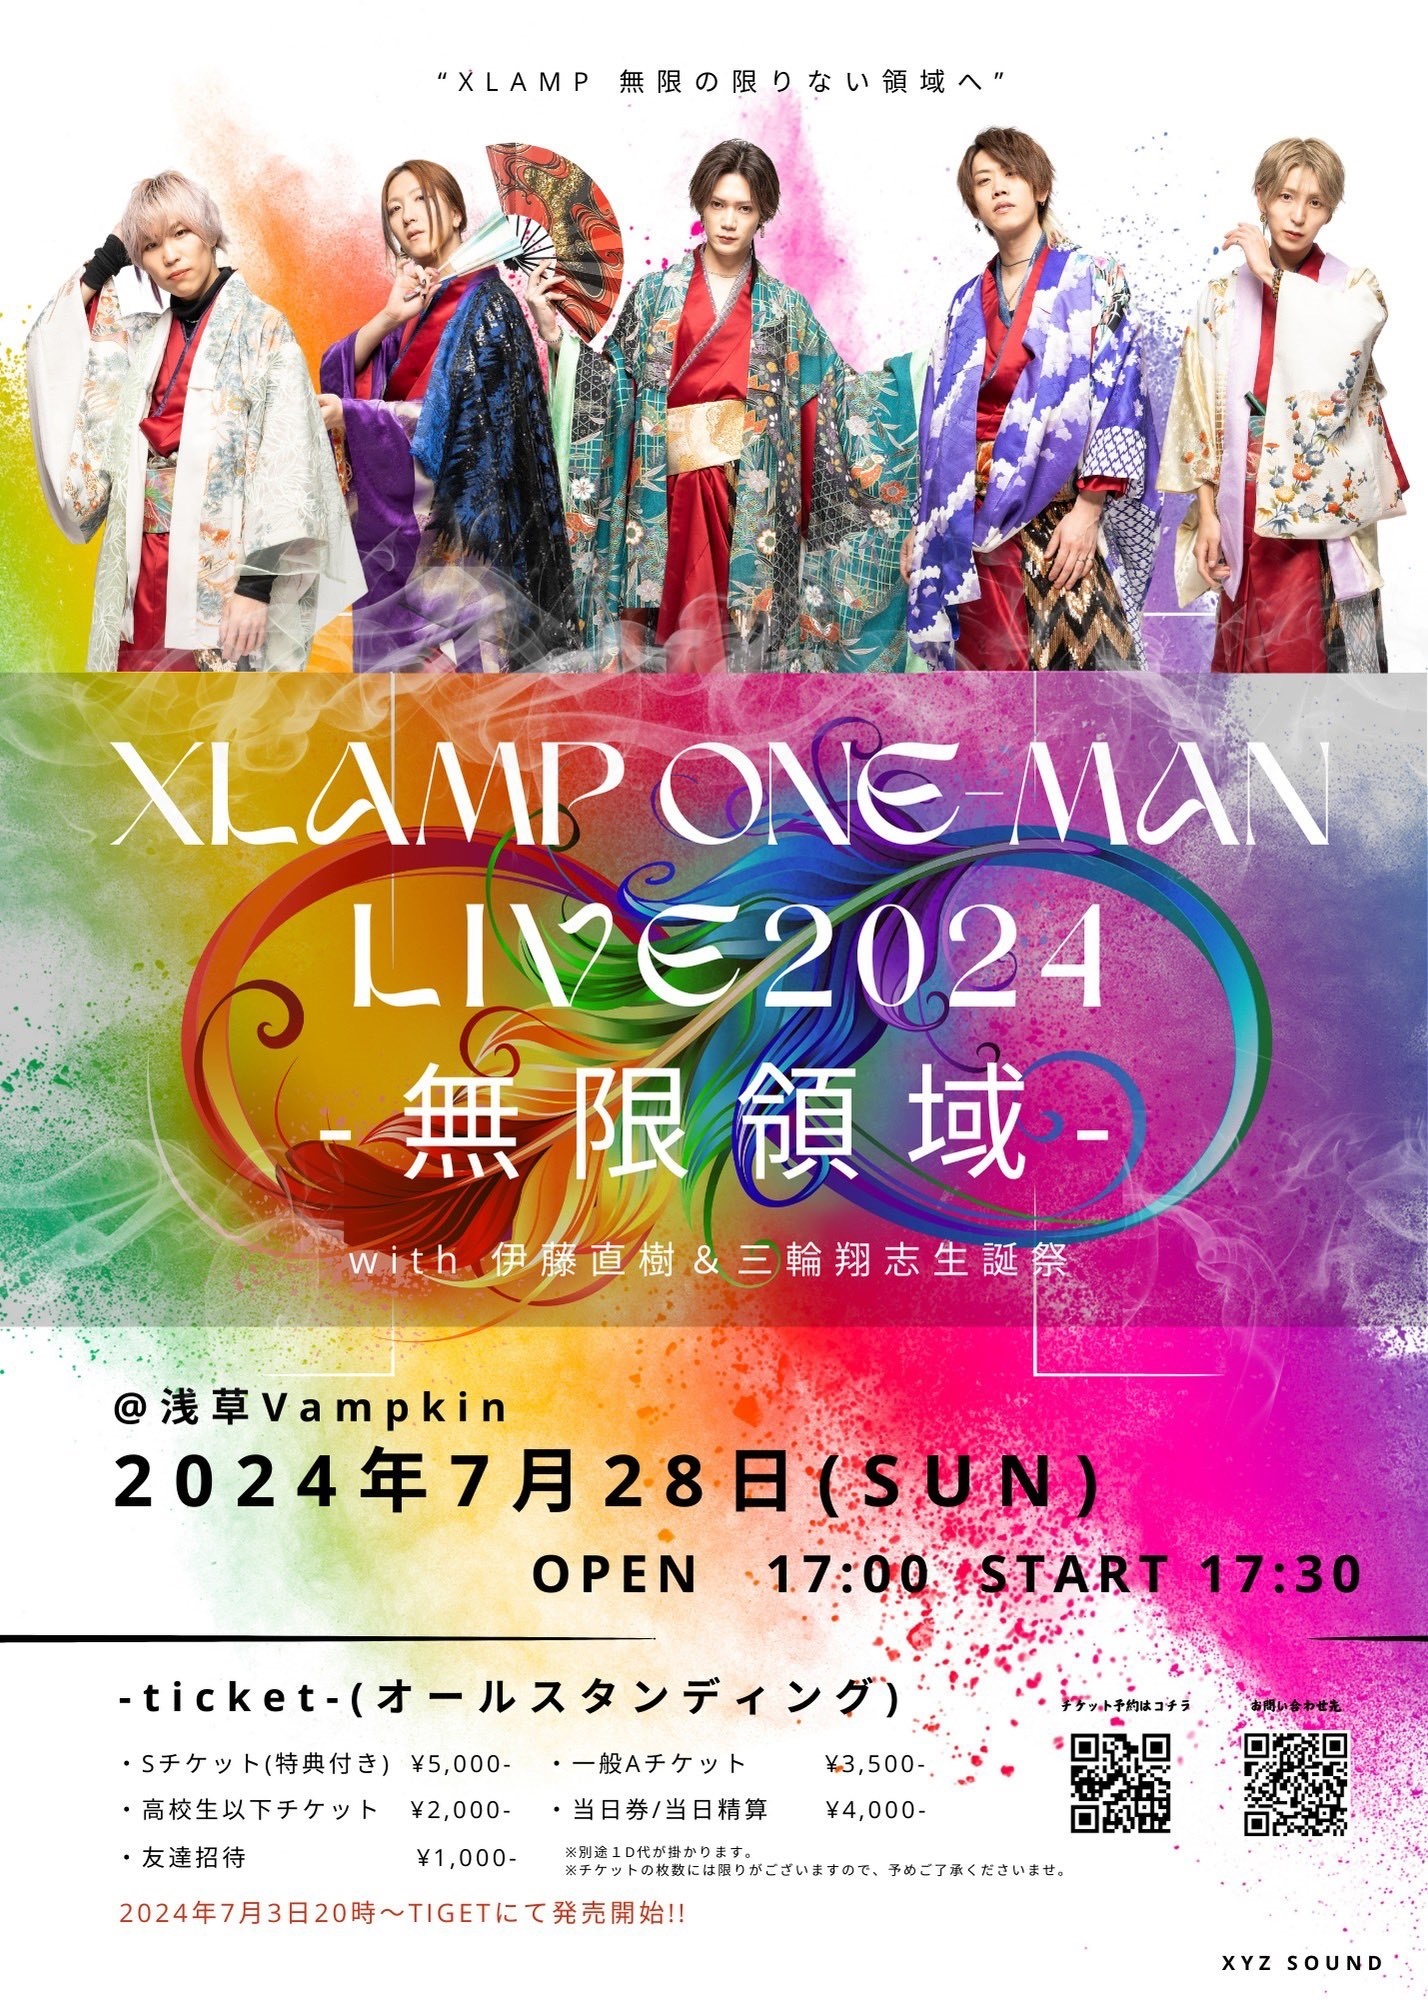 7.28(Sun) XLAMP one-man LIVE 2024-無限領域- with 伊藤直樹u0026三輪翔志 生誕祭 | BASS ON  TOPライブハウスまとめ